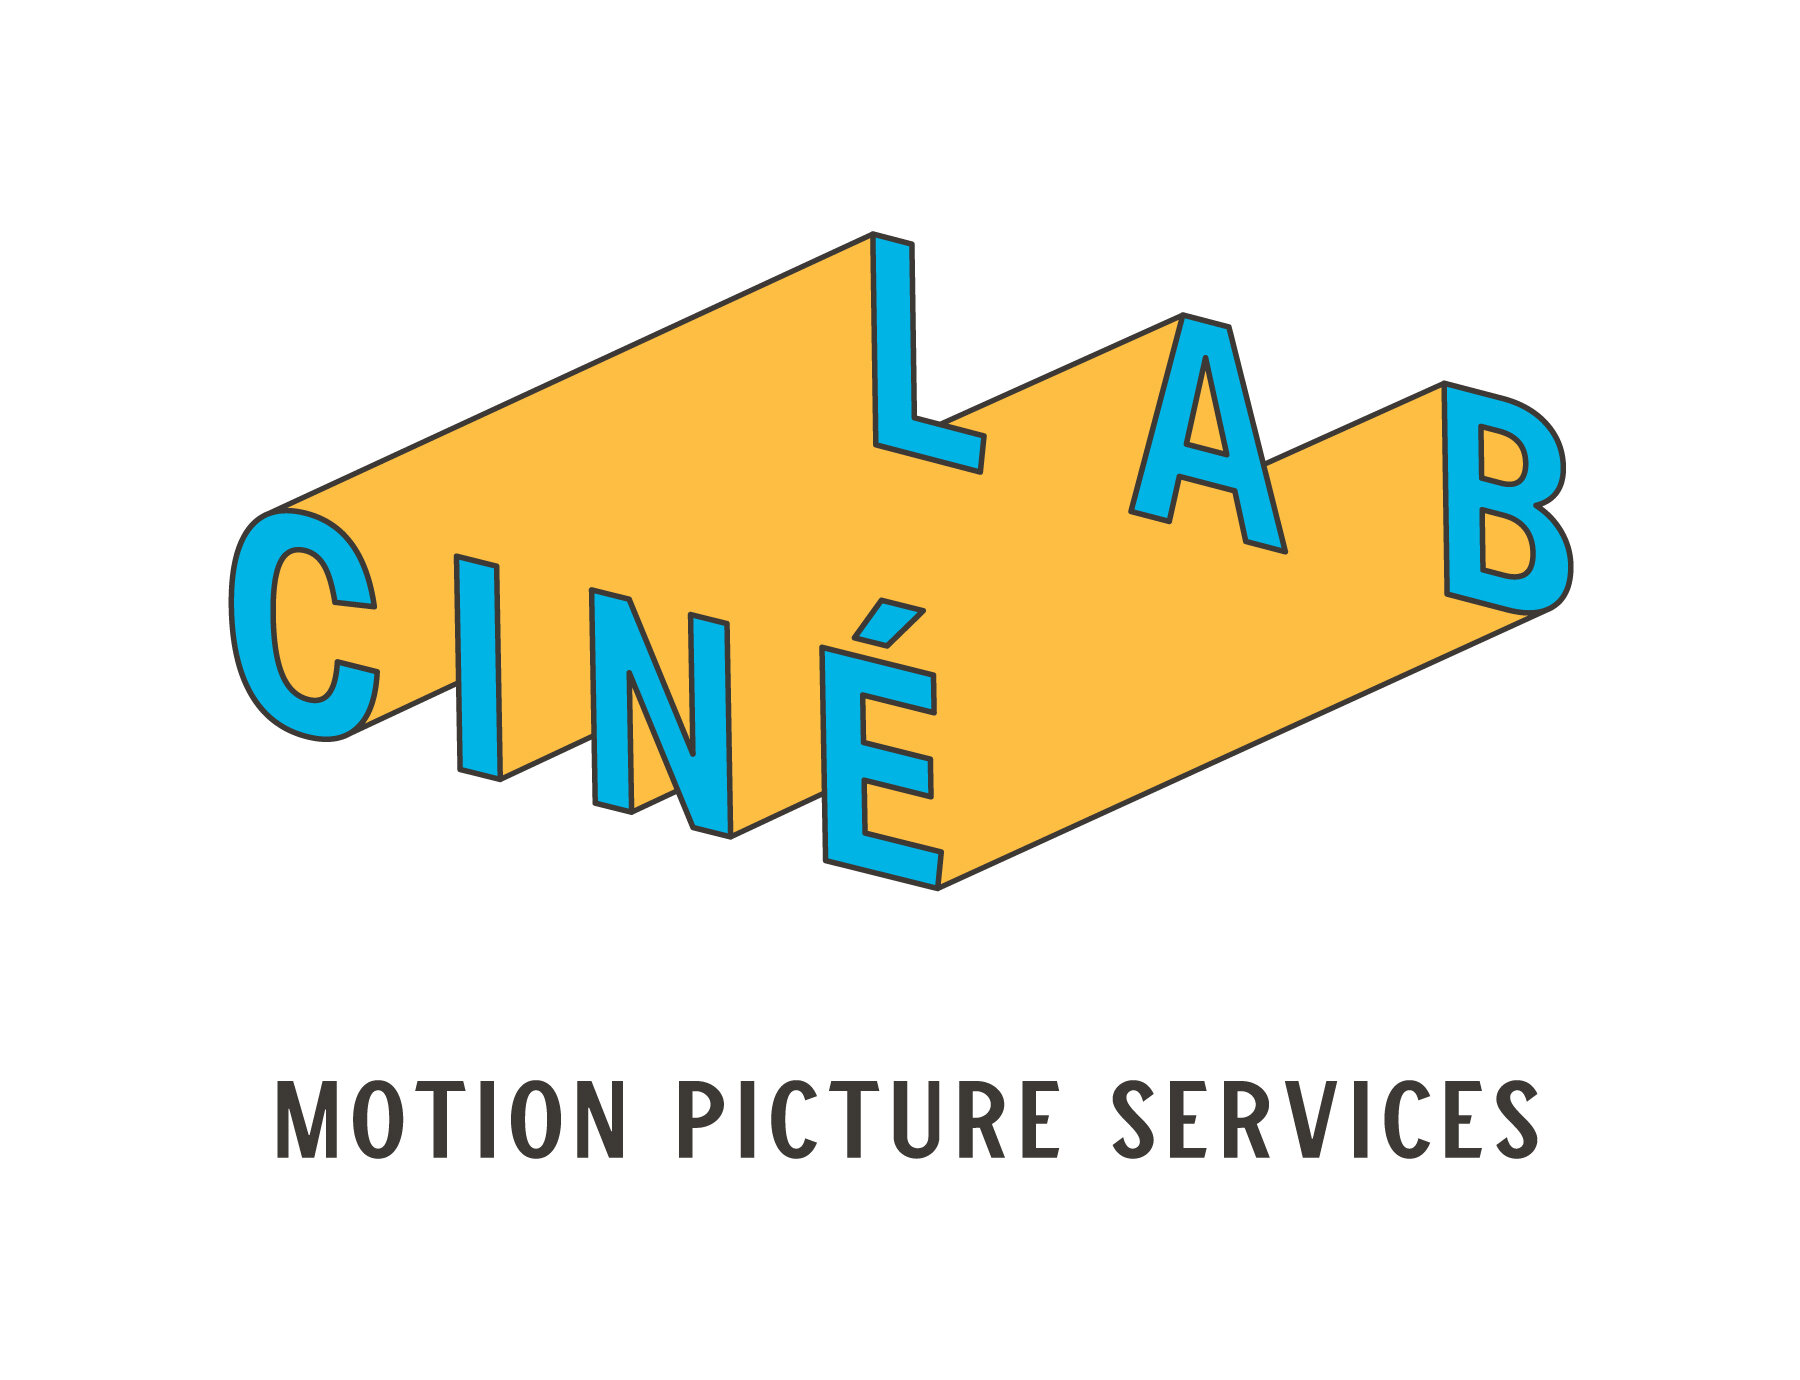 35mm Film — New Jersey Film Lab